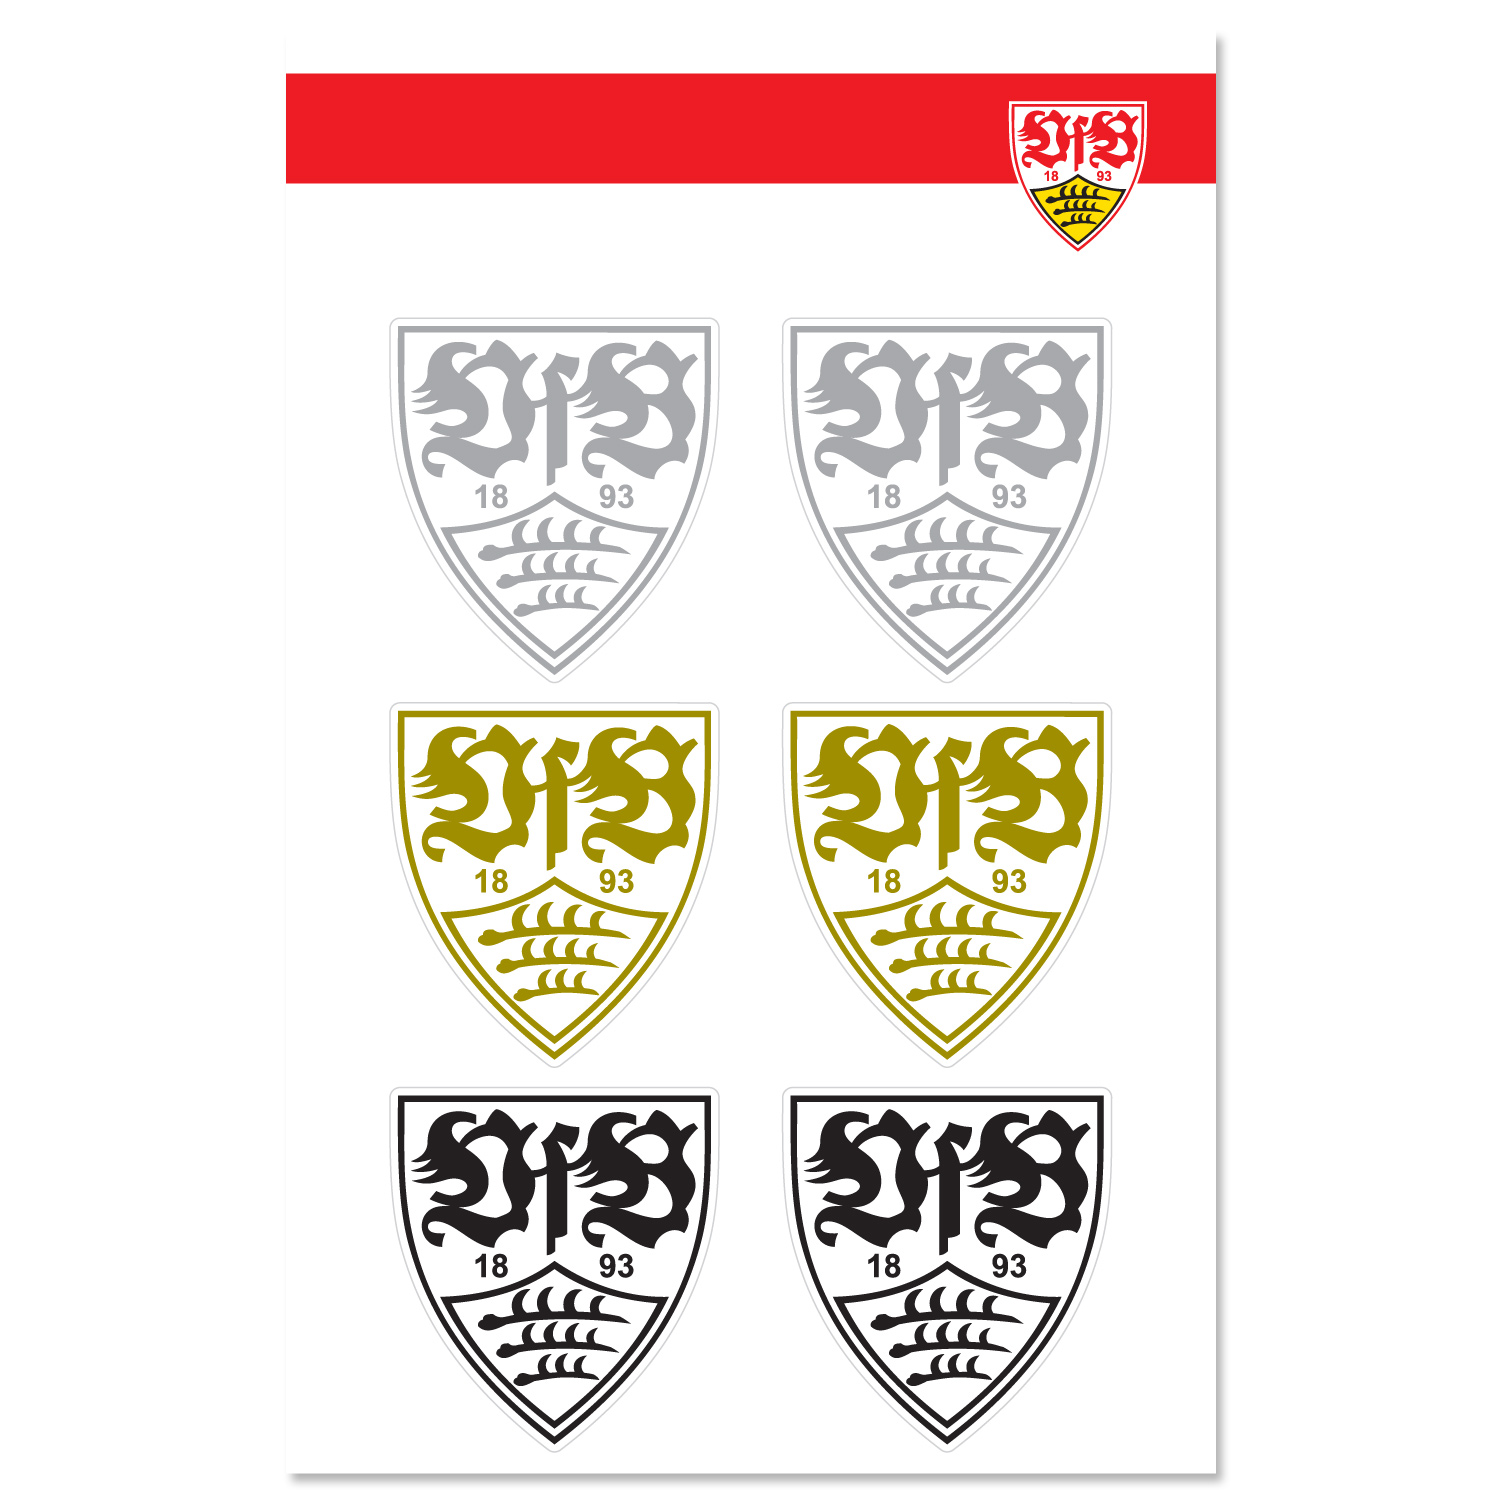 VfB Stuttgart Aufkleberbogen 4er Set Wappen schwarz rot silber gold Aufklebe 